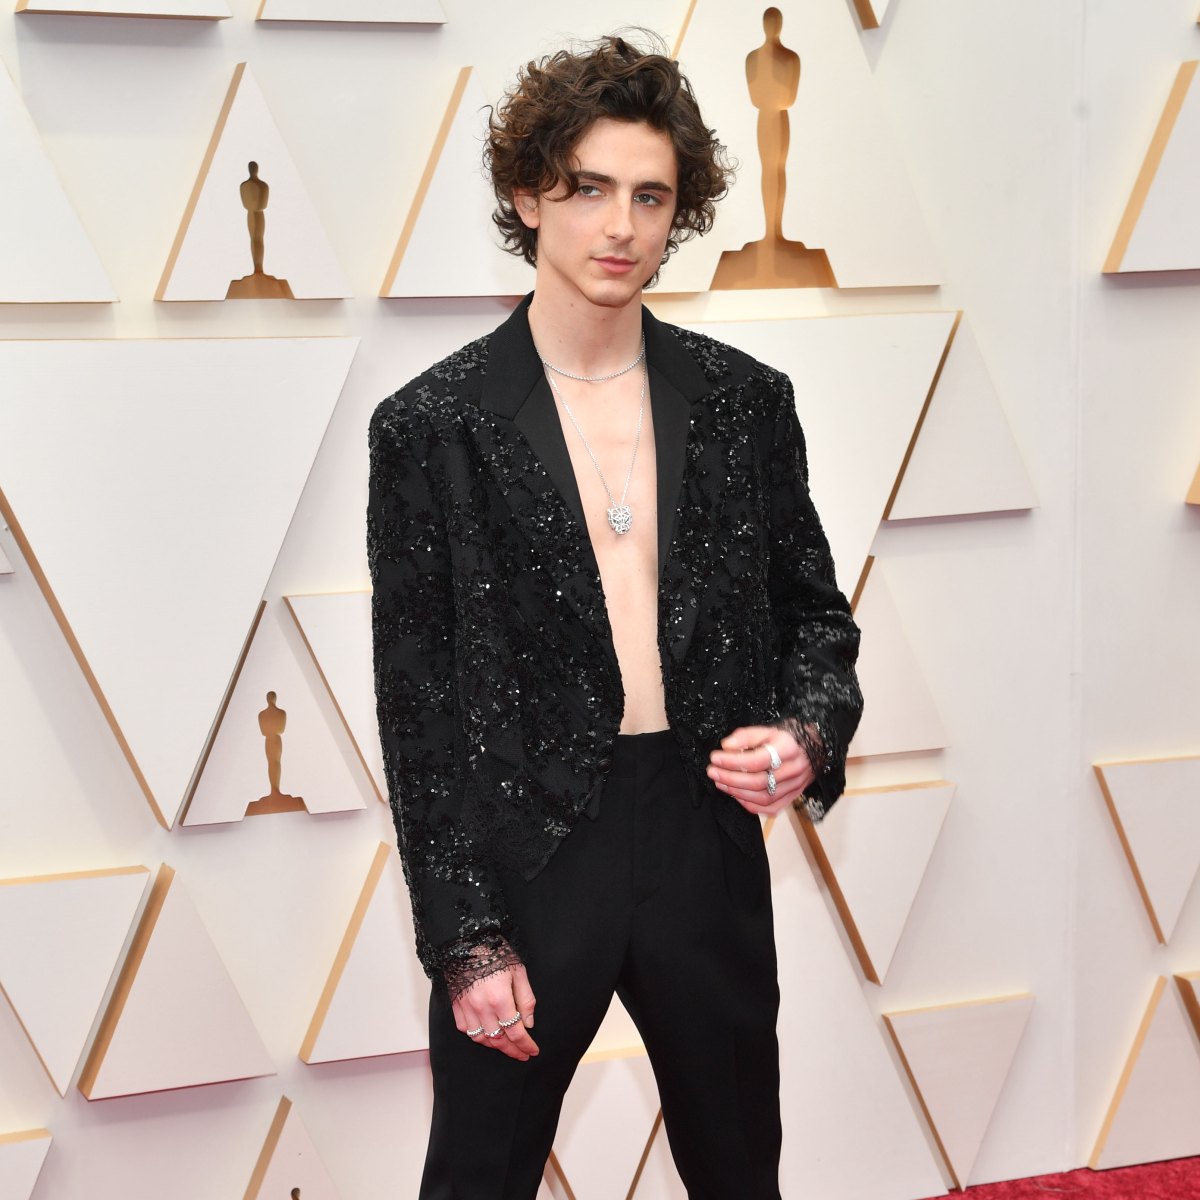 Timothee Chalamet Goes Shirtless at Oscars 2022: Photo 4733993, 2022 Oscars,  Oscars, Timothee Chalamet Photos